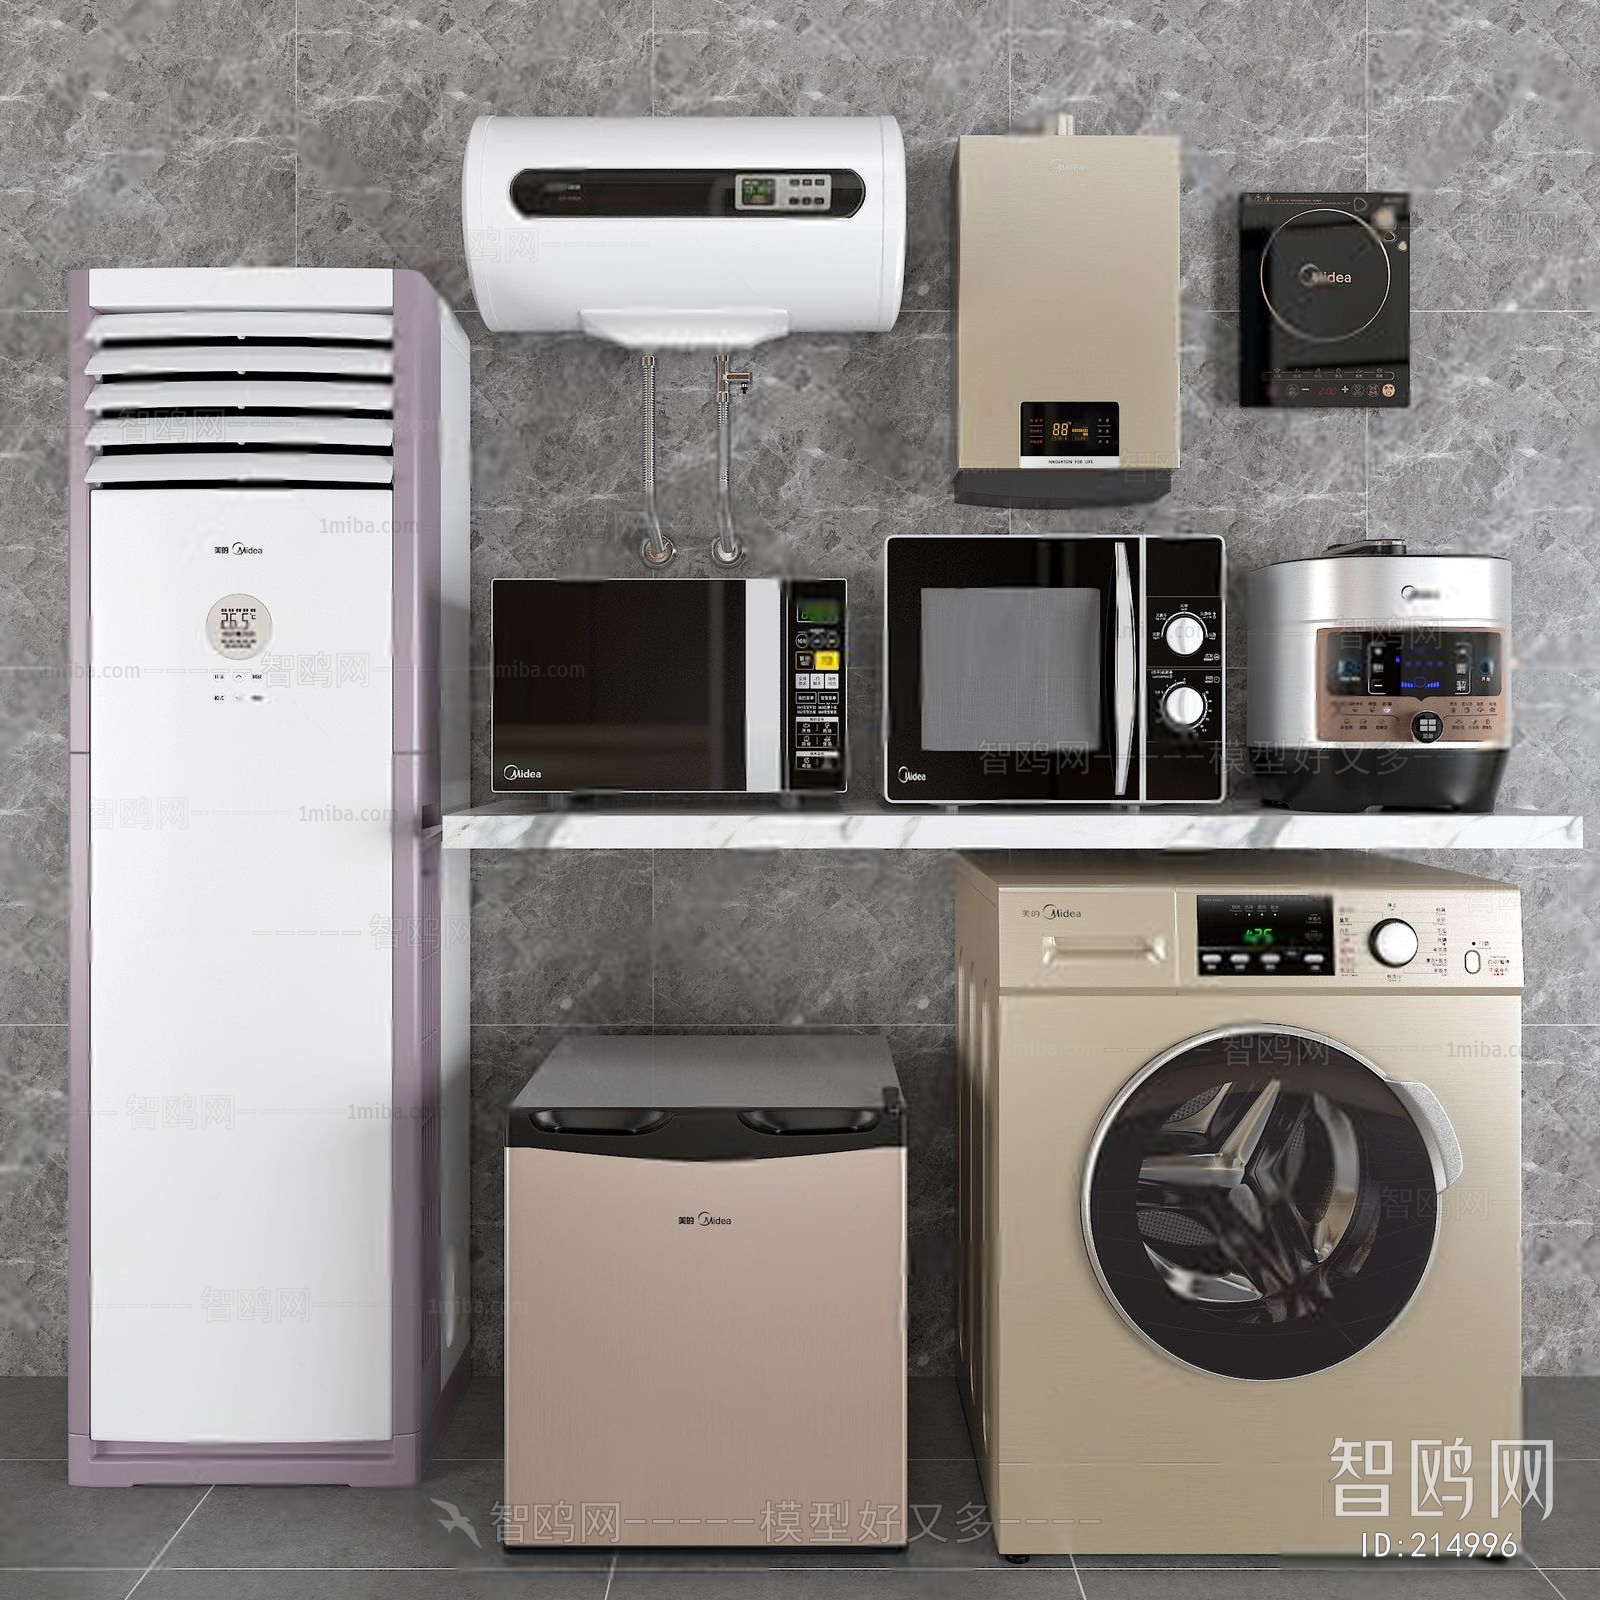 Modern Household Appliances